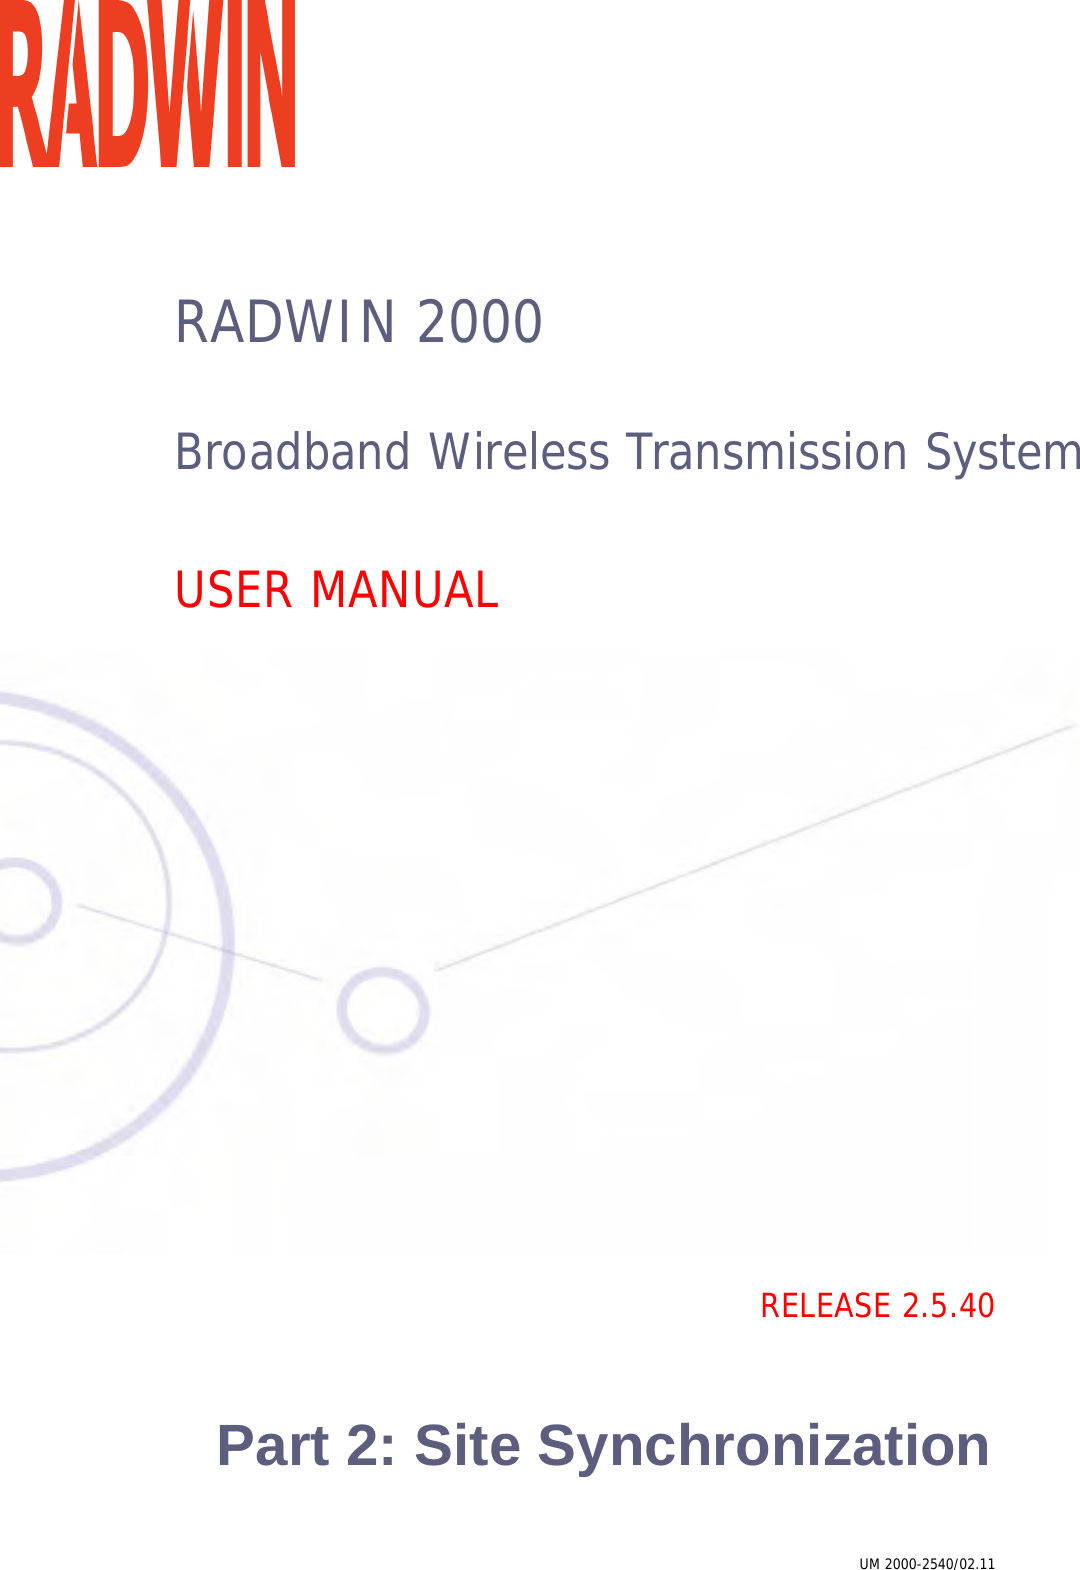 RADWIN 2000Broadband Wireless Transmission SystemUSER MANUALRELEASE 2.5.40Part 2: Site SynchronizationUM 2000-2540/02.11